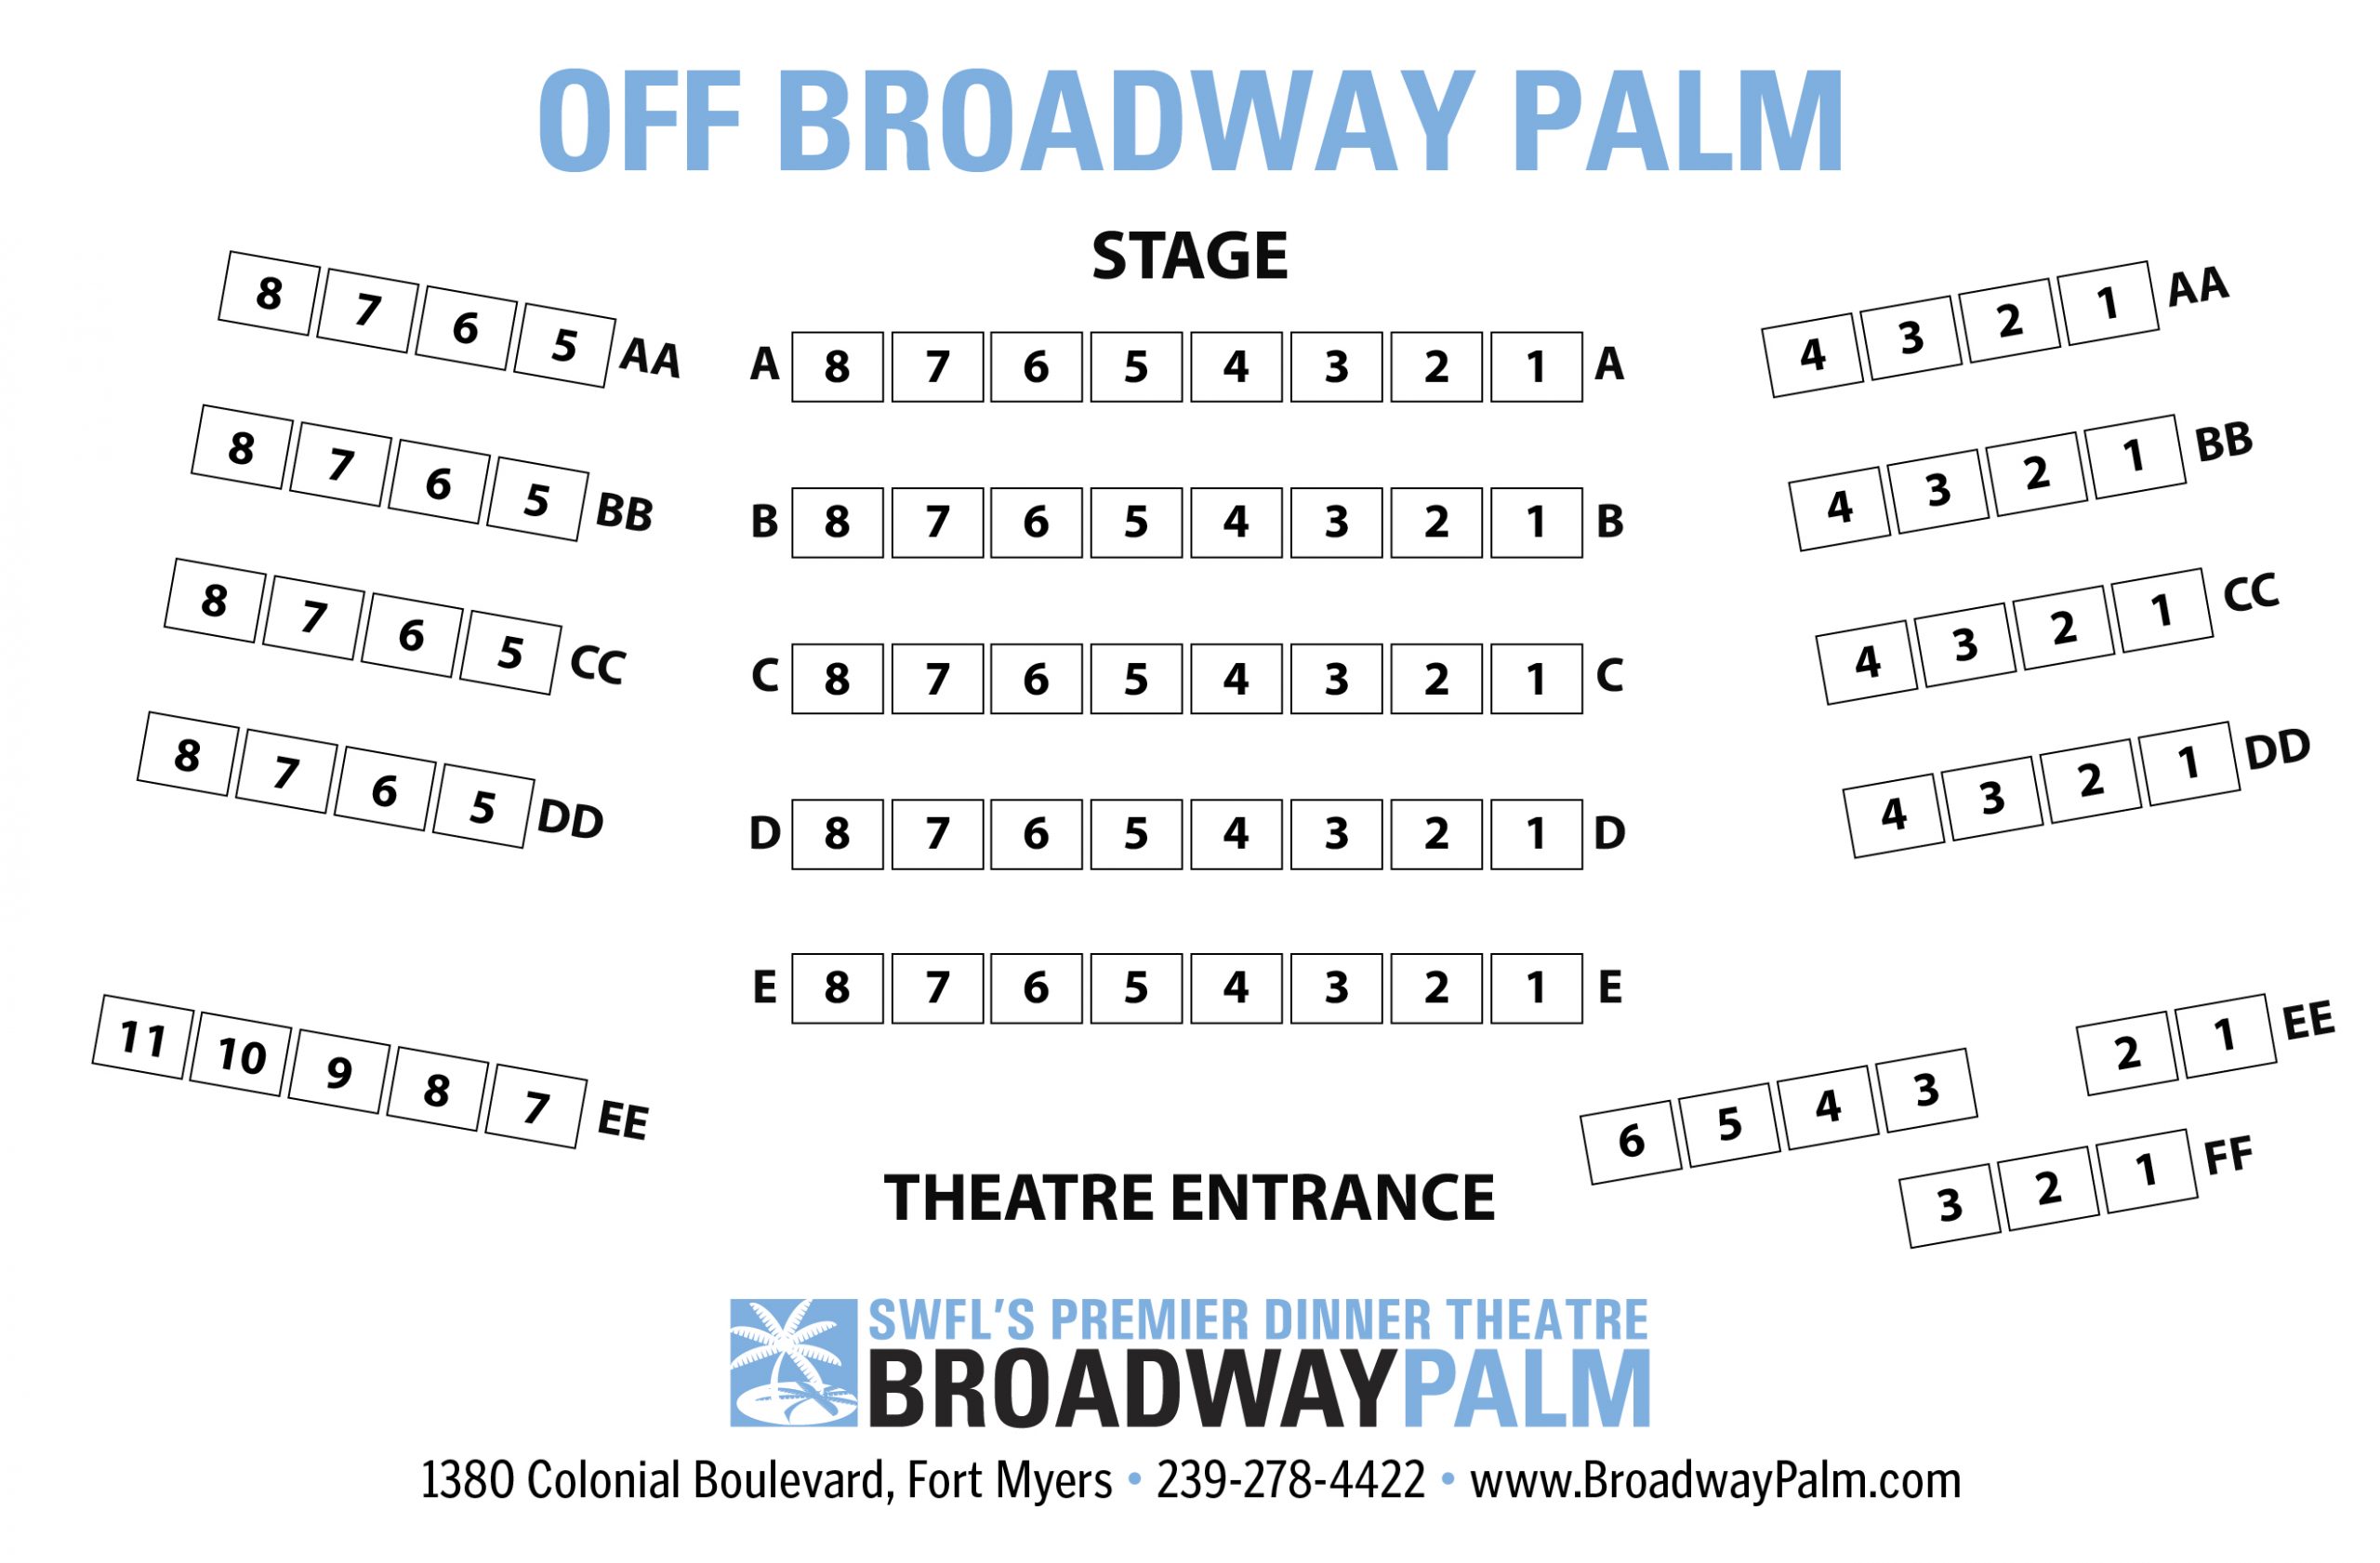 Off Broadway Palm Theatre